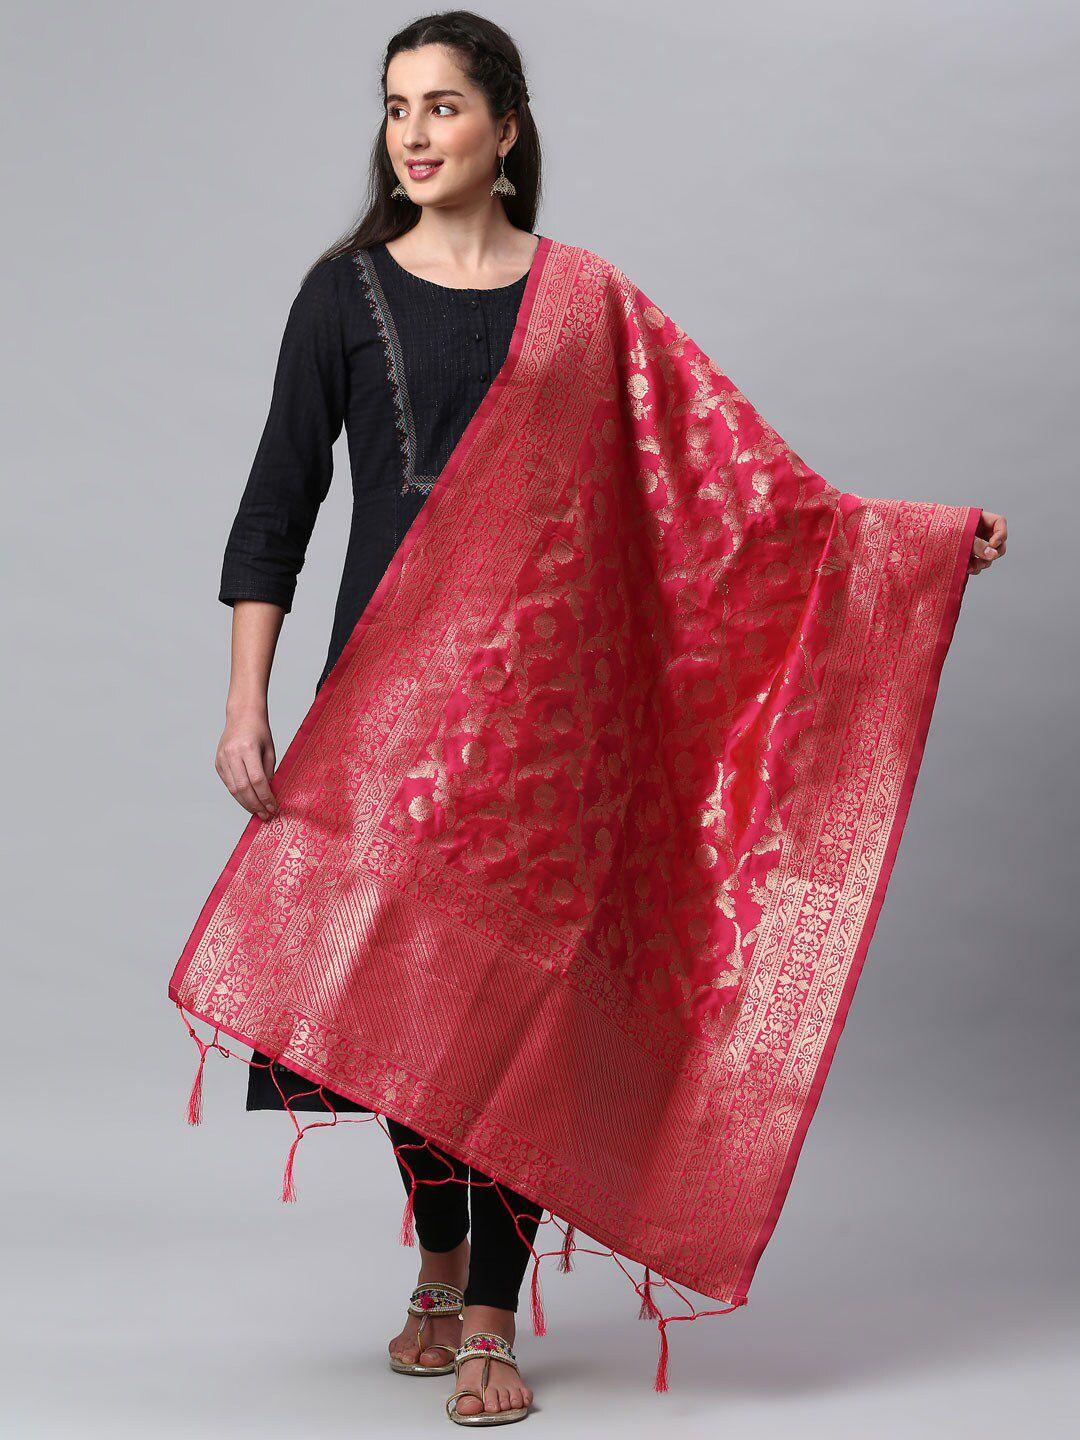 lilots-red-&-gold-toned-ethnic-motifs-woven-design-dupatta